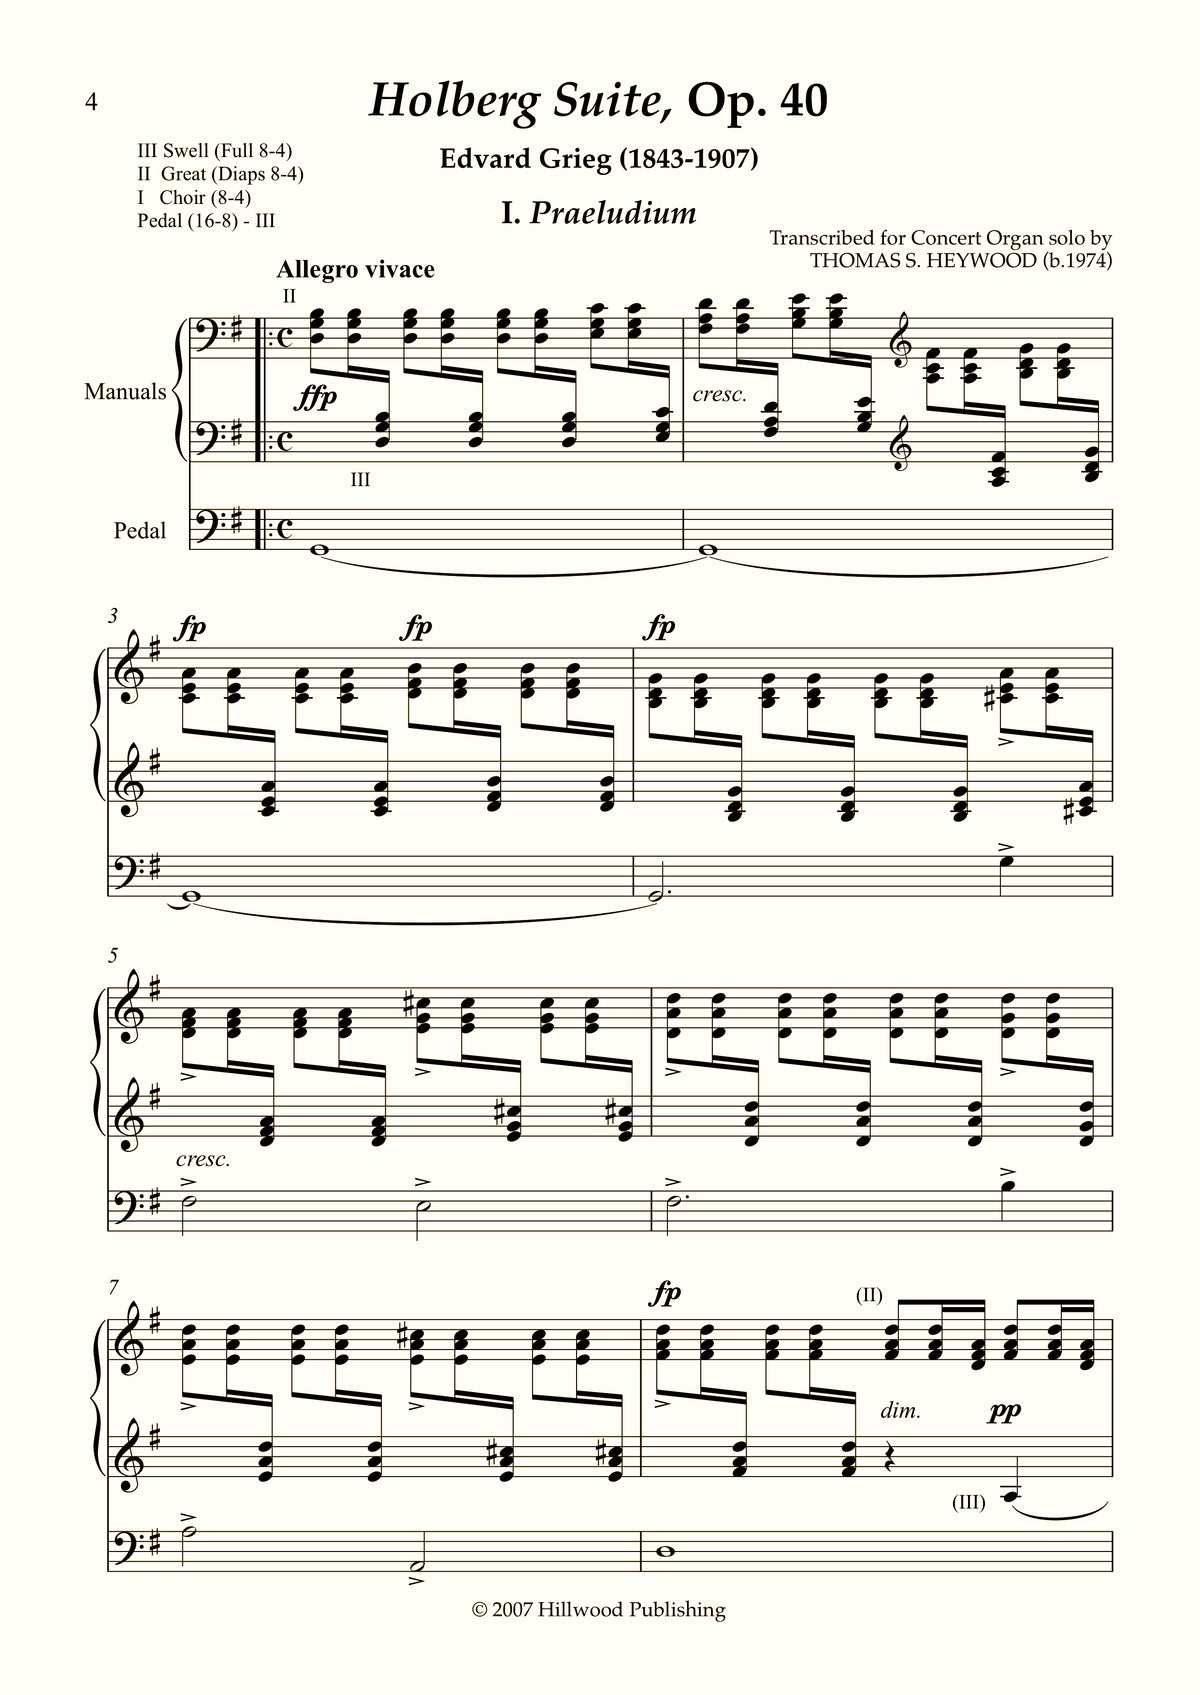 Grieg/Heywood - Praeludium from the Holberg Suite, Op. 40 (Score)